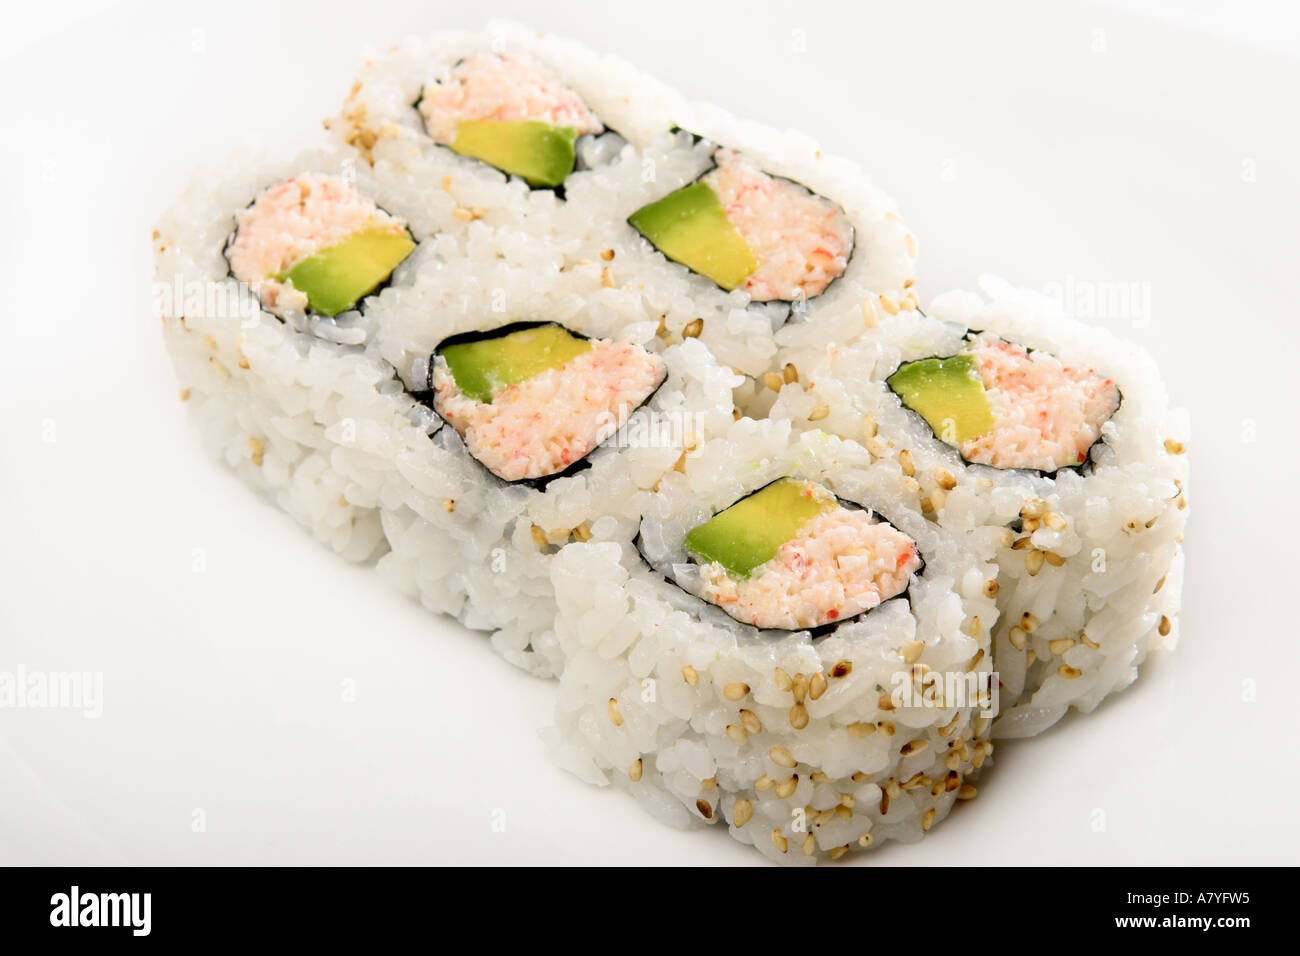 https://c8.alamy.com/comp/A7YFW5/california-roll-sushi-with-white-background-A7YFW5.jpg